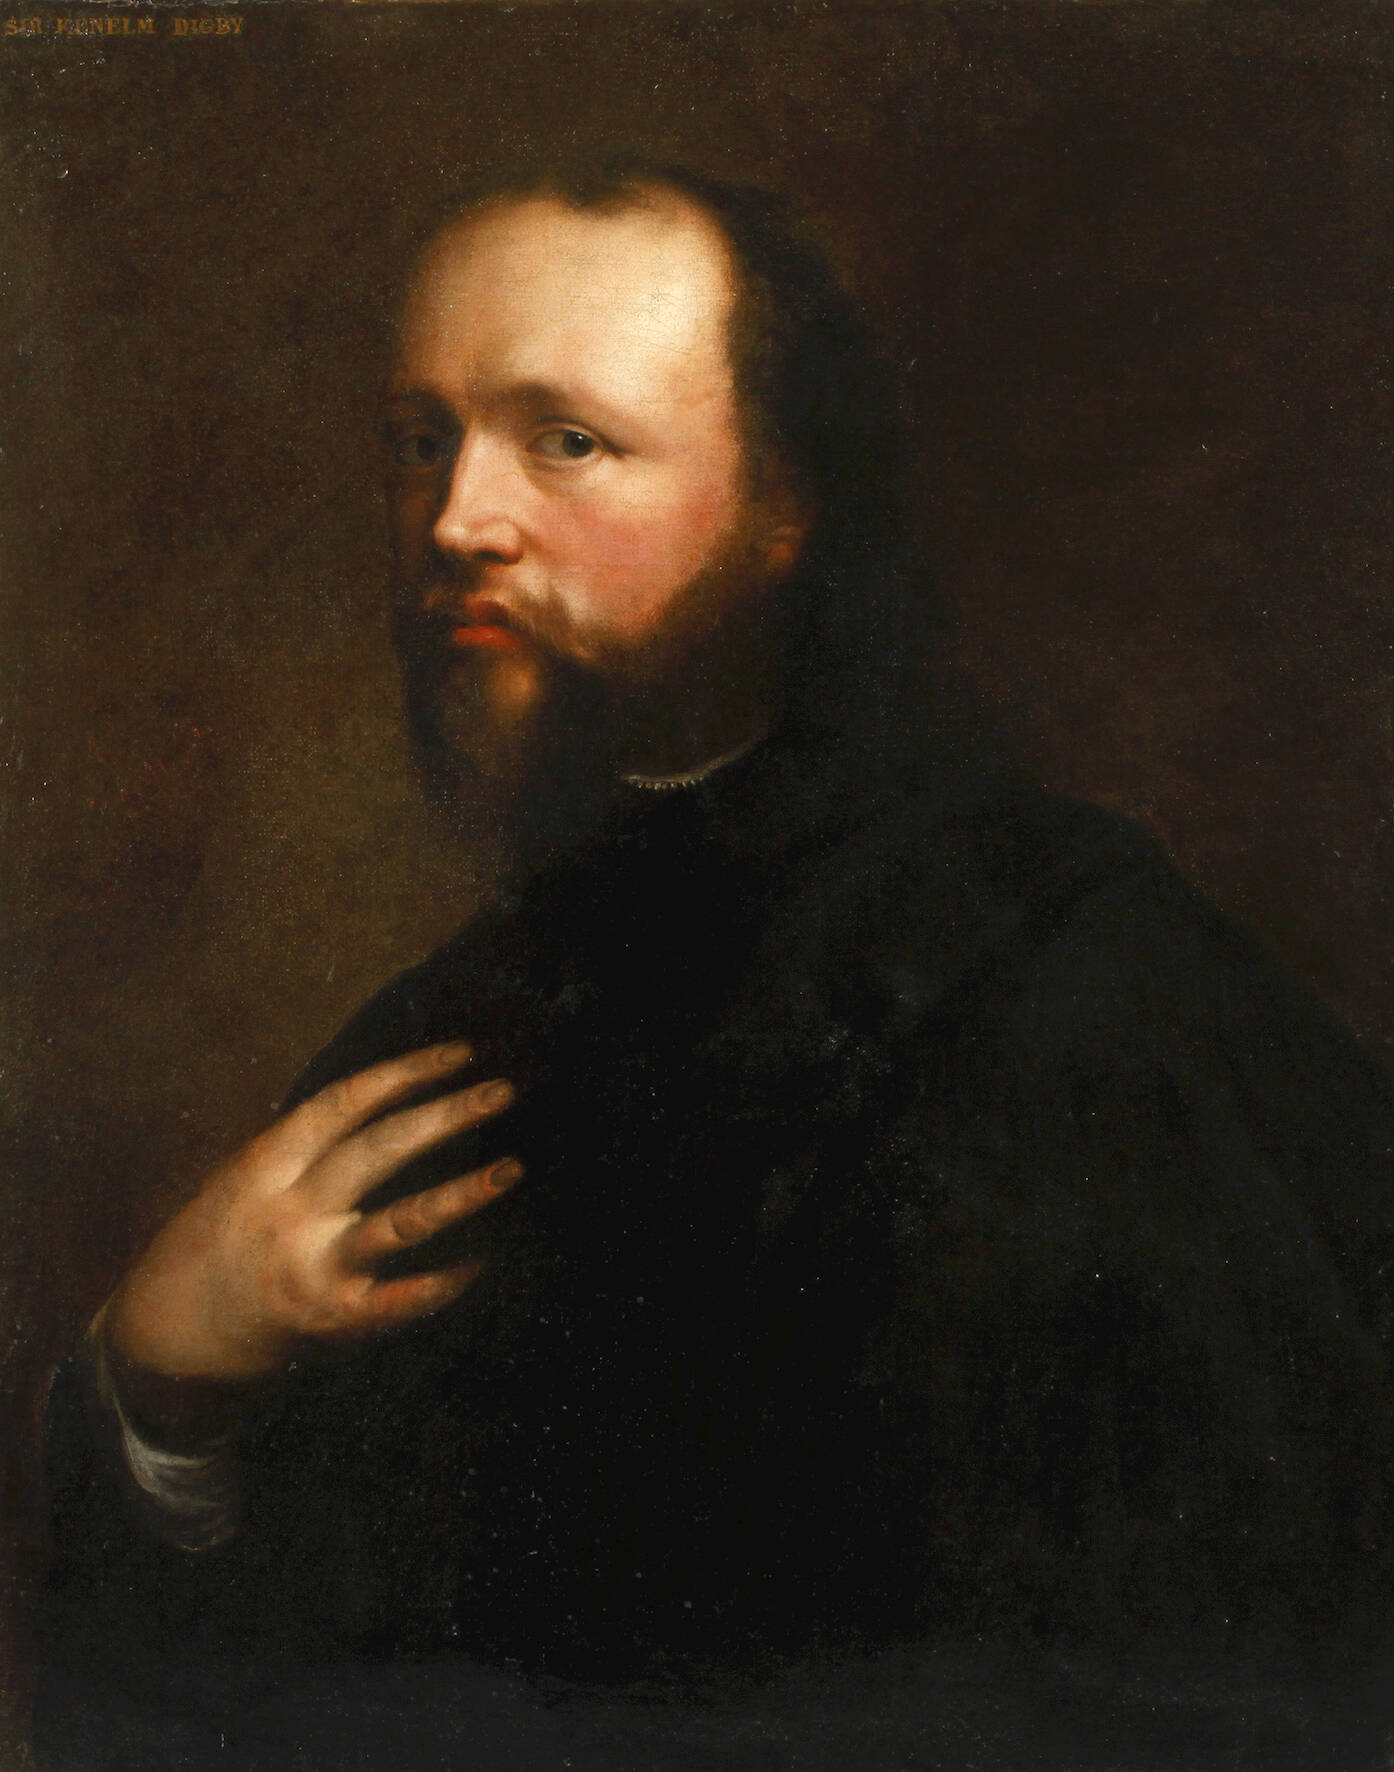 Portrait des Sir Kenelm Digby nach Anthony van Dyck